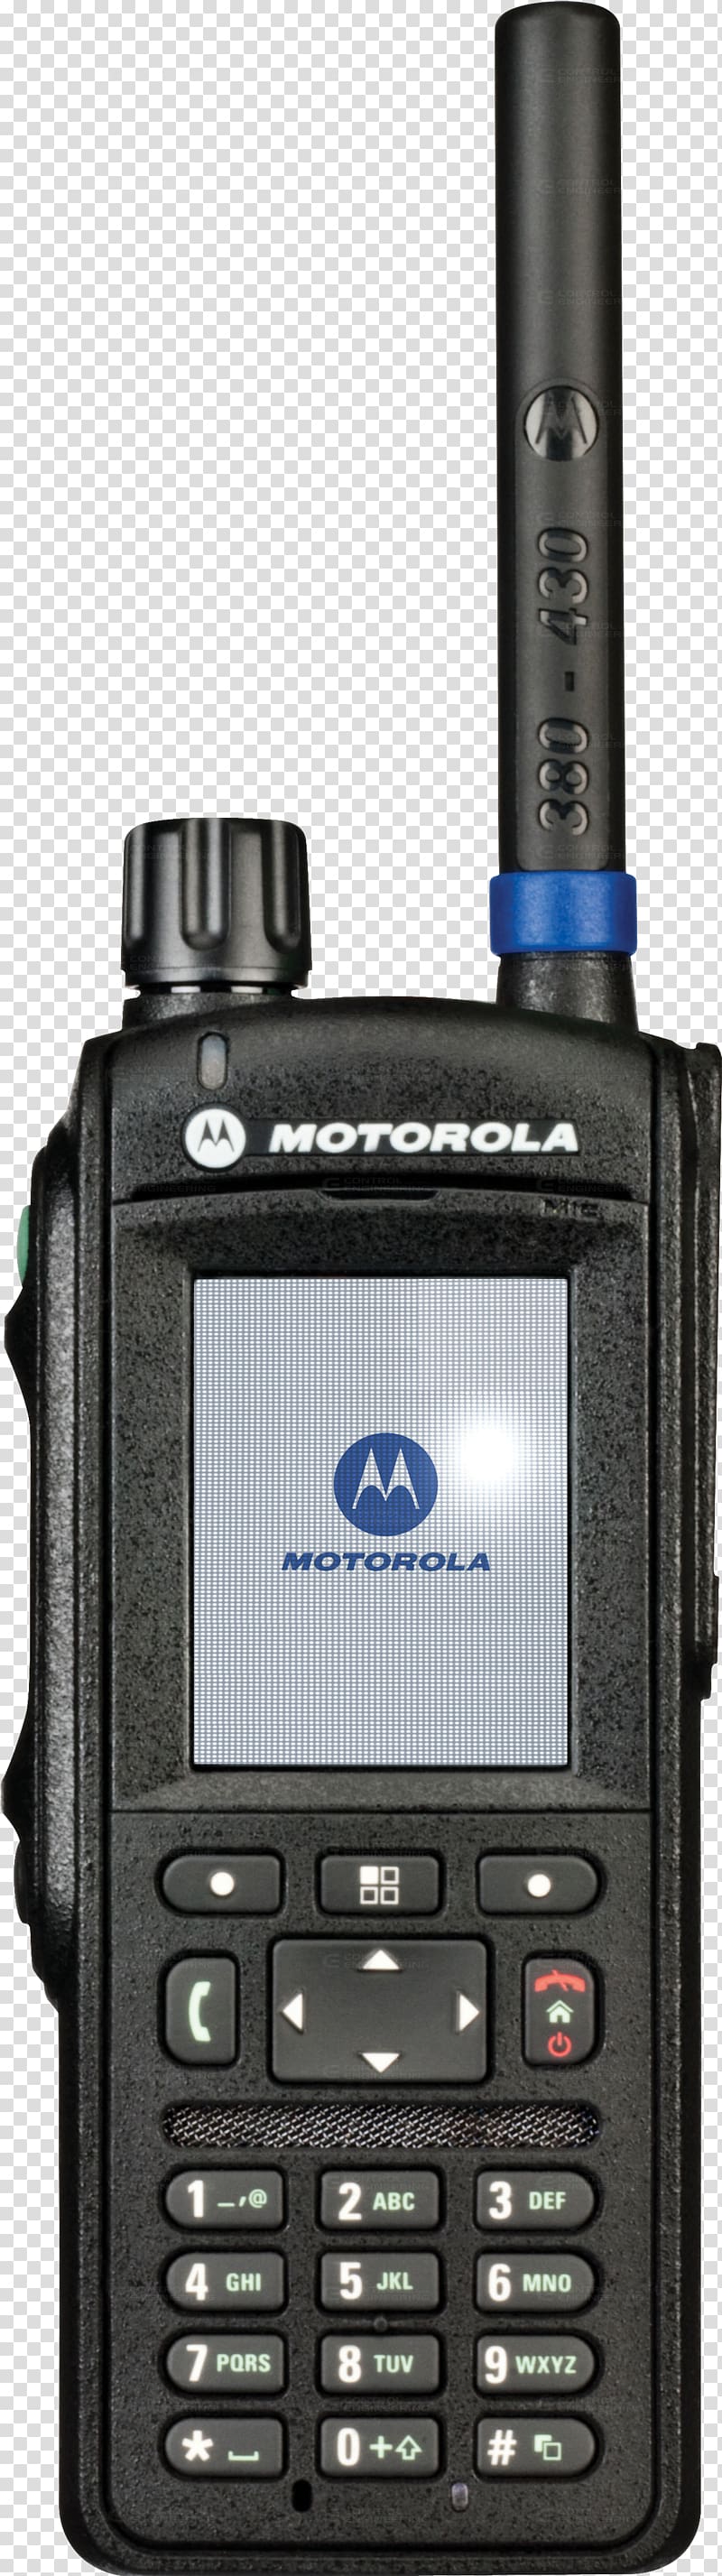 Handheld Two-Way Radios Terrestrial Trunked Radio Motorola, motorola startac transparent background PNG clipart